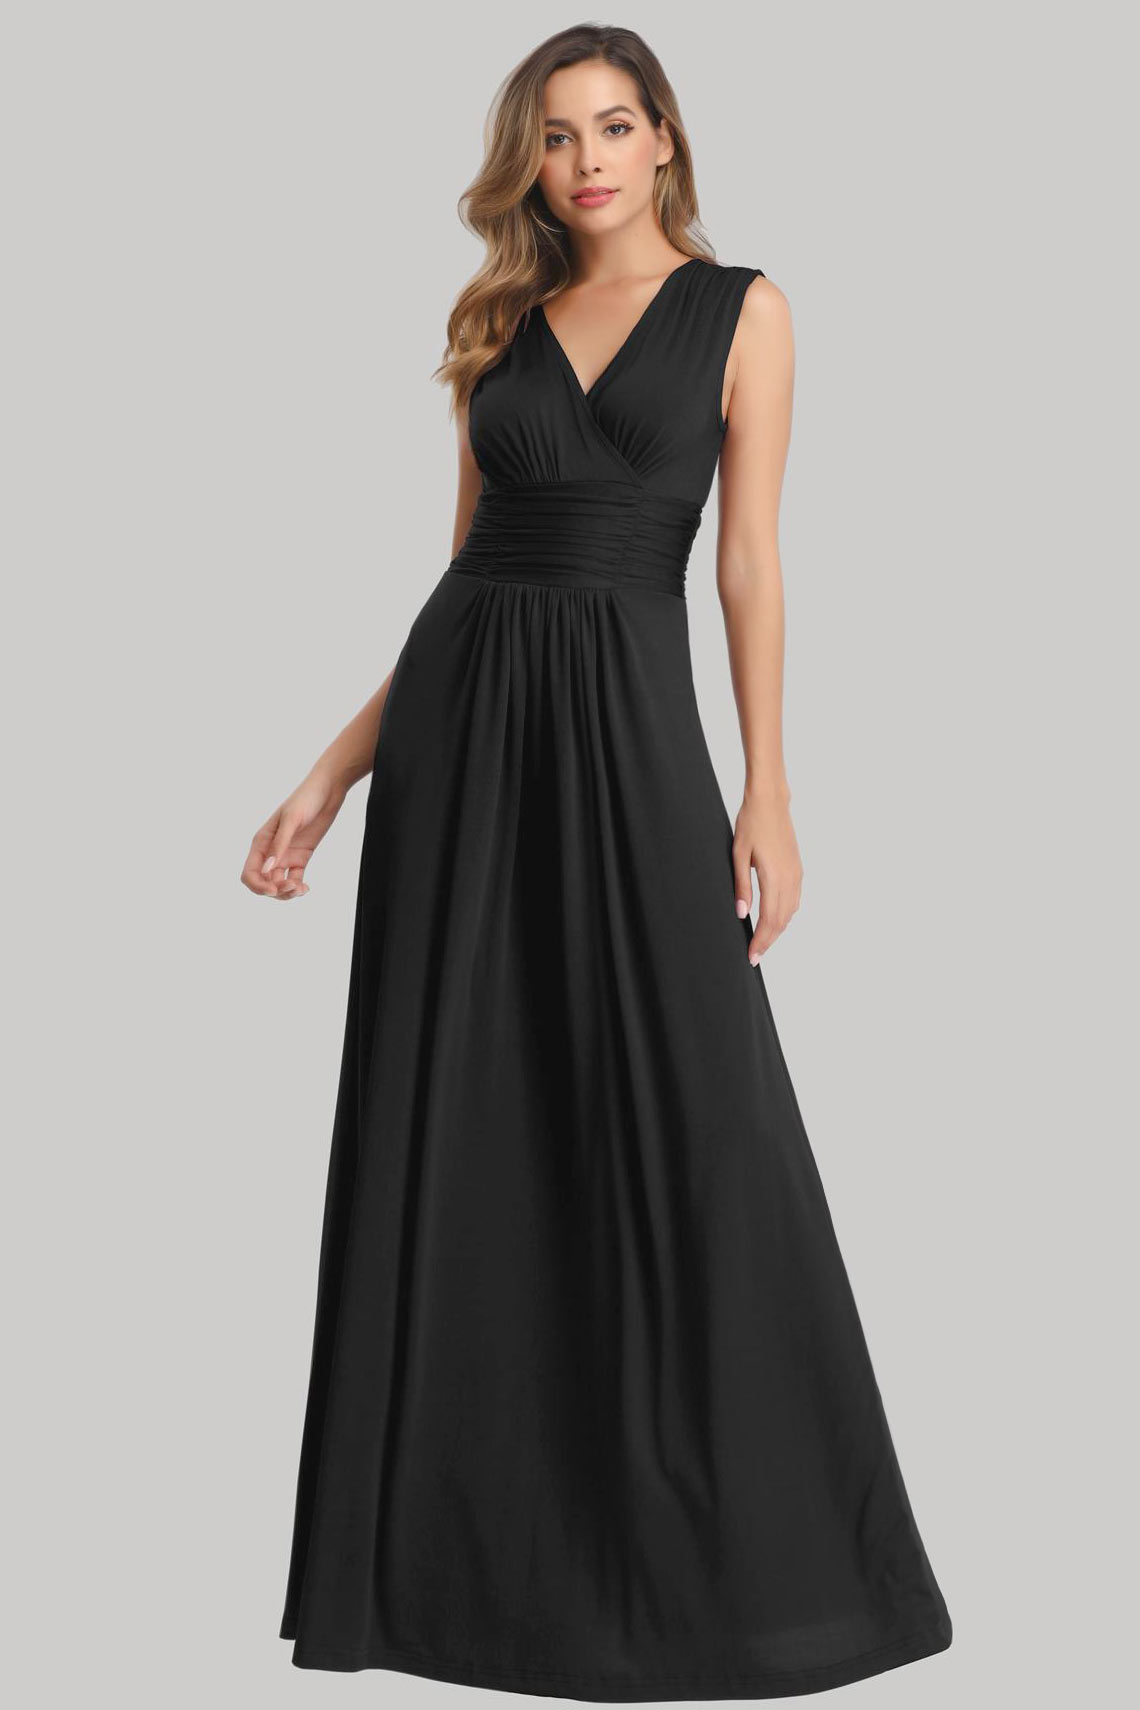 robe-noir-longue-de-ceremonie-decollete-v-tissu-elastique.JPG?profile=RESIZE_710x